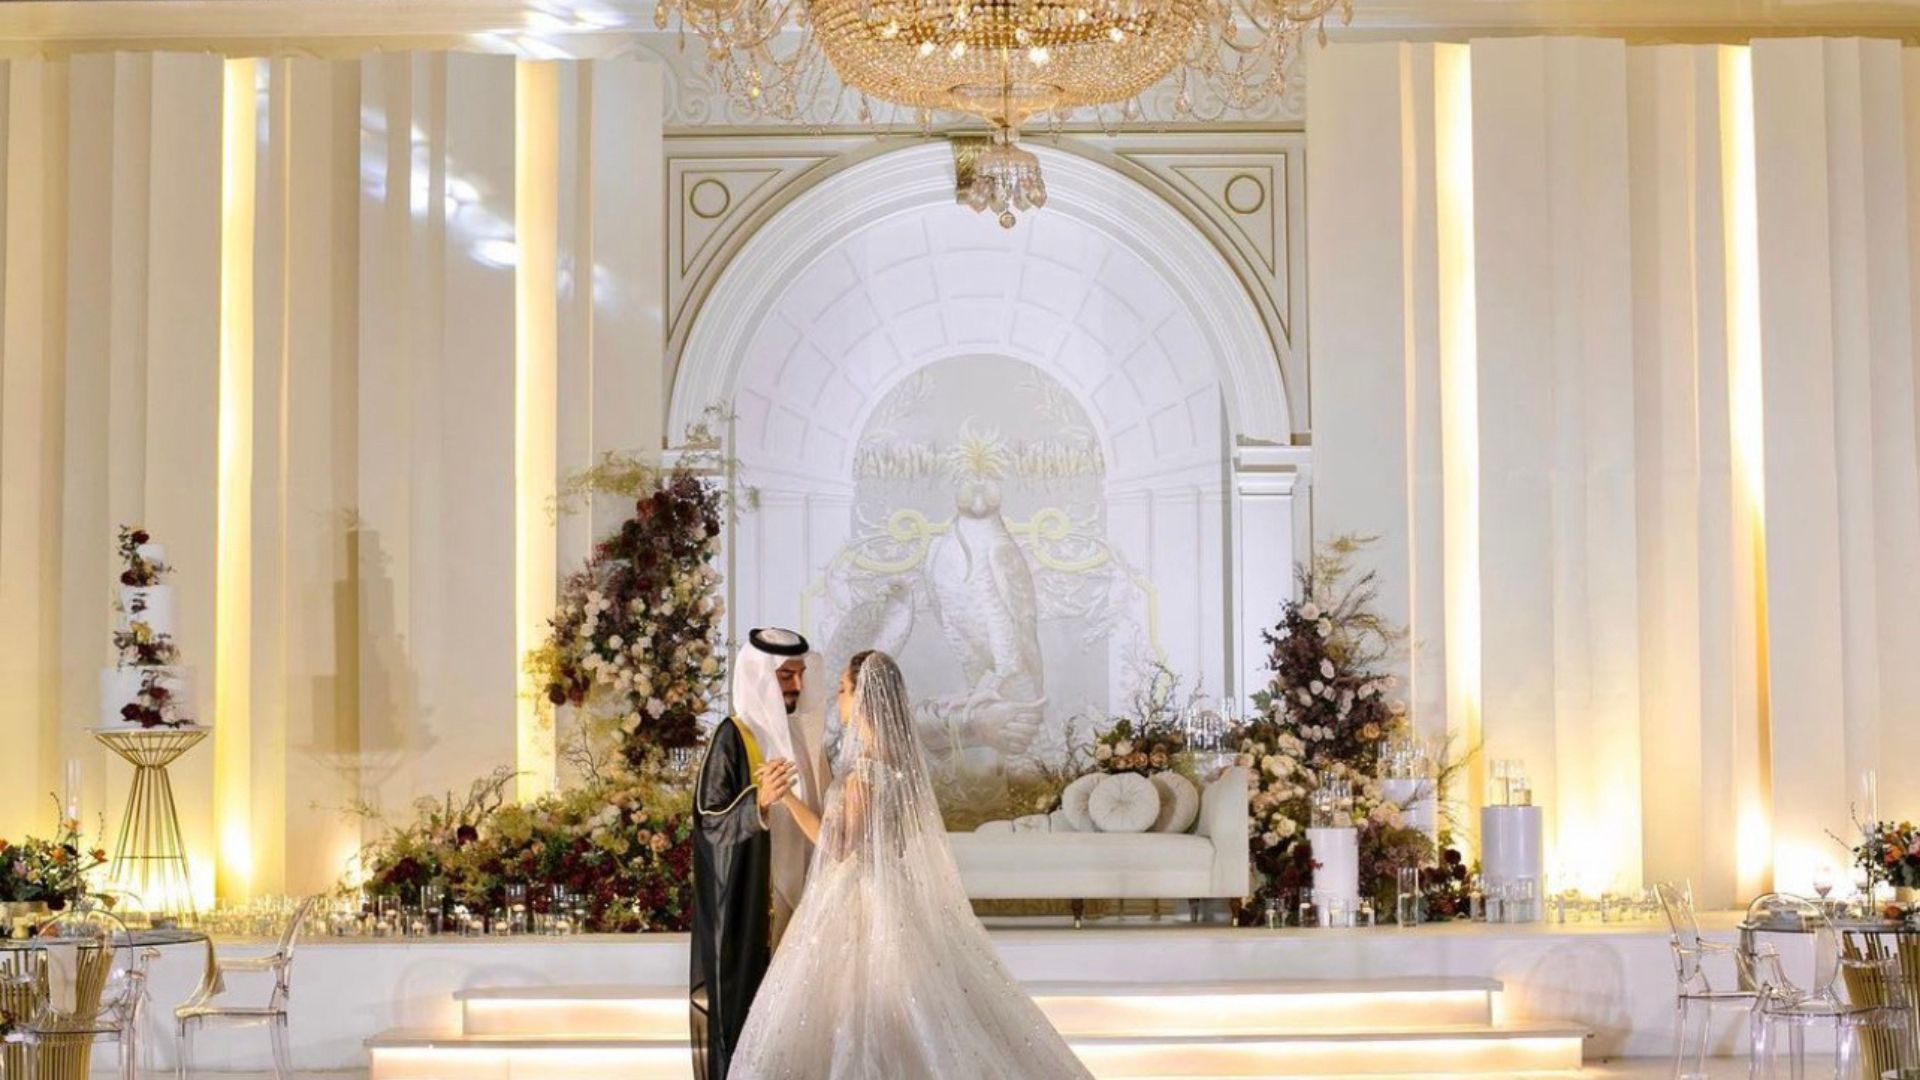 The 8 Best Wedding Venues Around The World